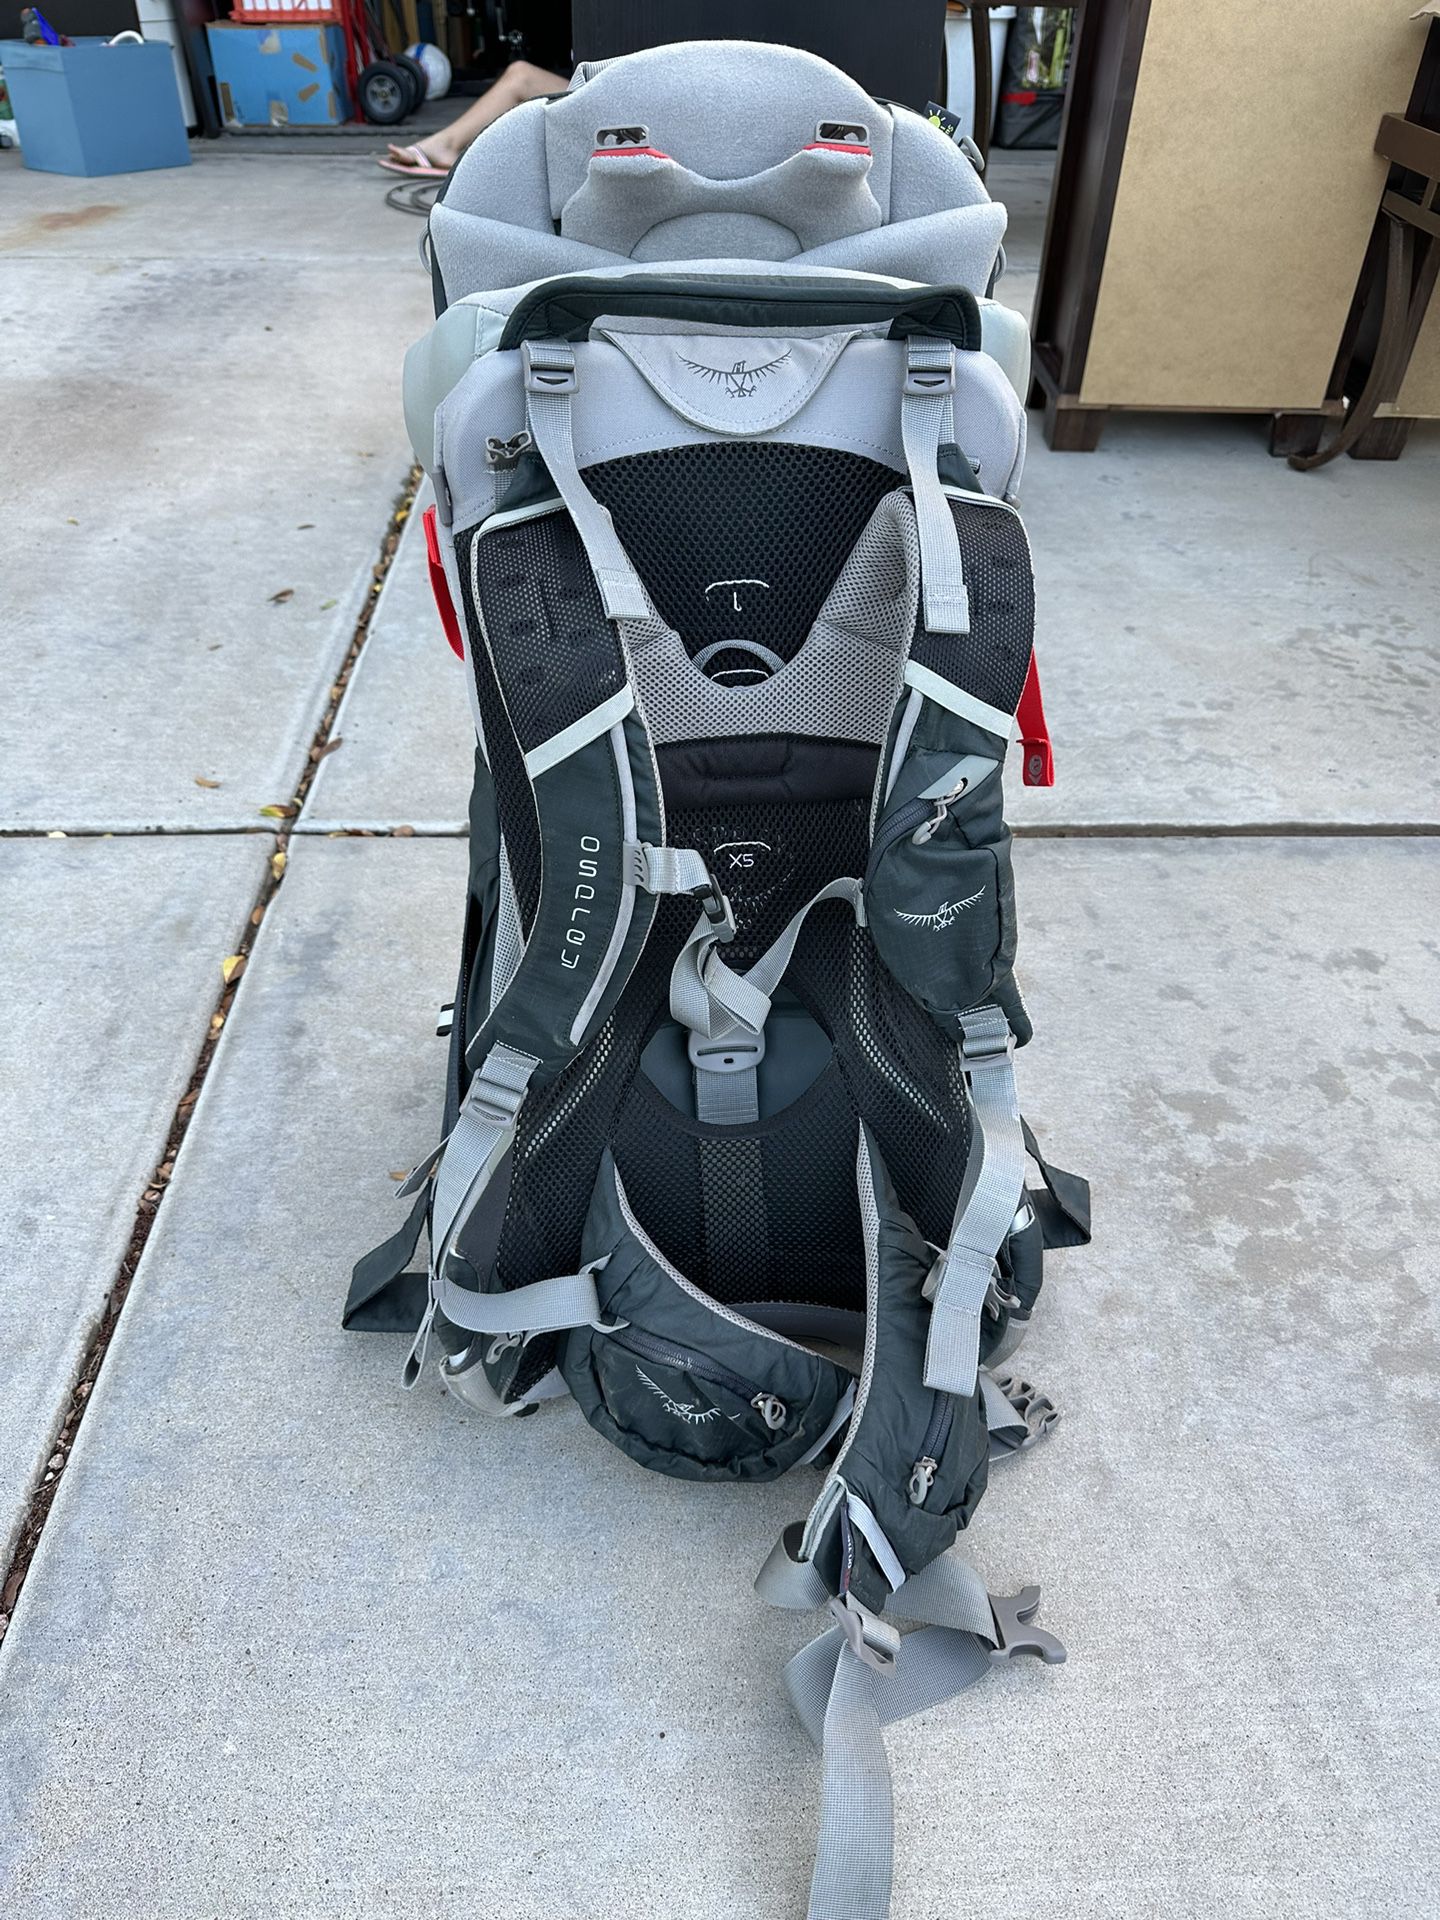 Osprey Poco Plus Child Carrier Backpack 